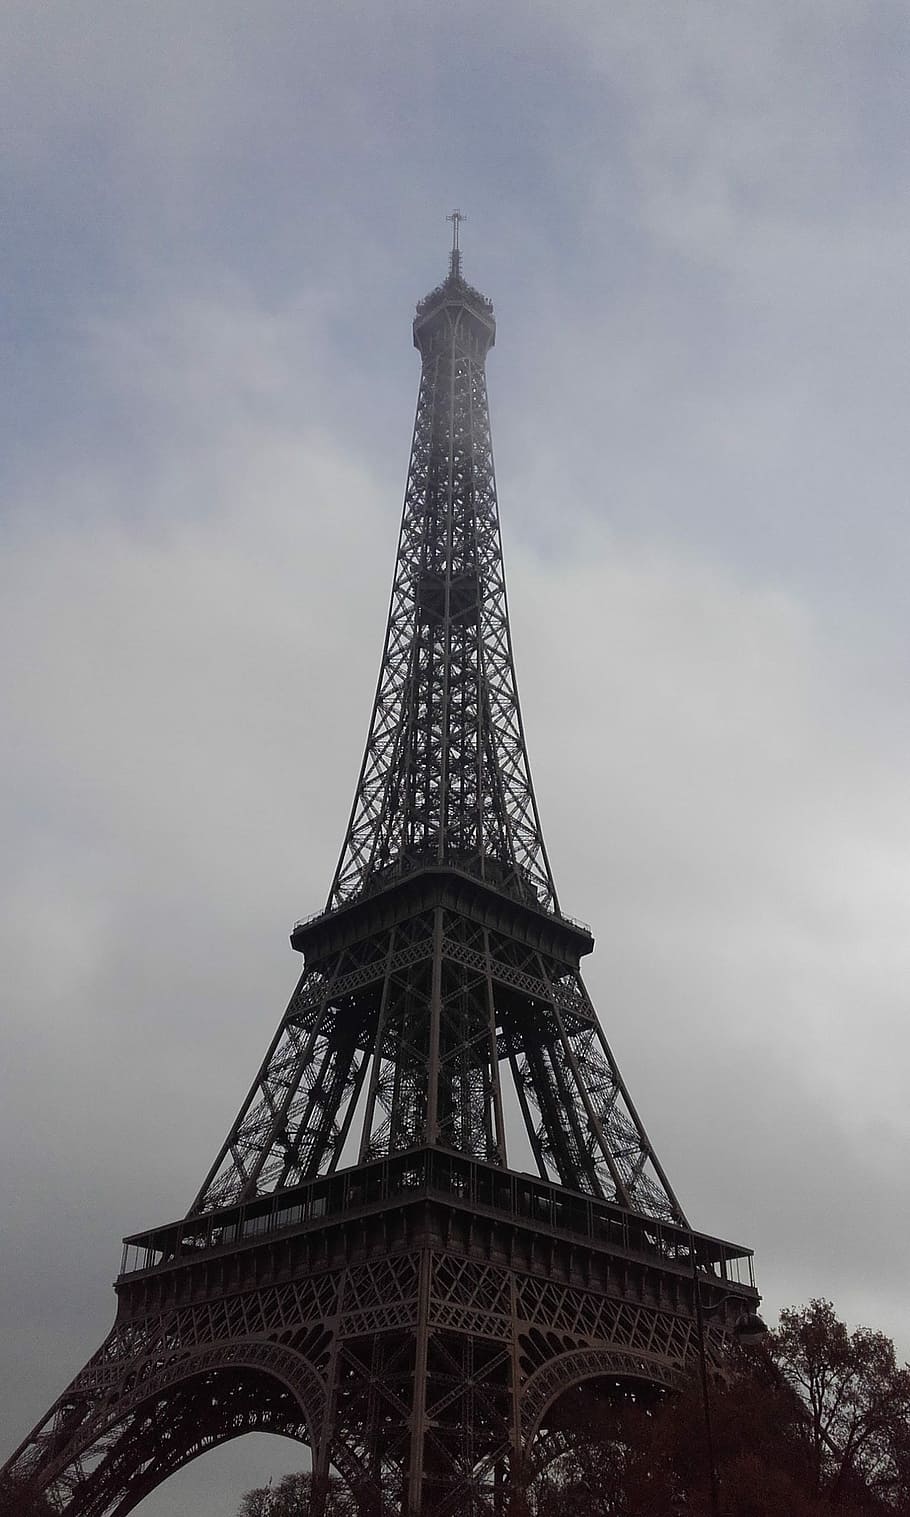 Paris, France, Eiffel Tower, tower, paris, france, monument, city of light, iron, engineering, lights